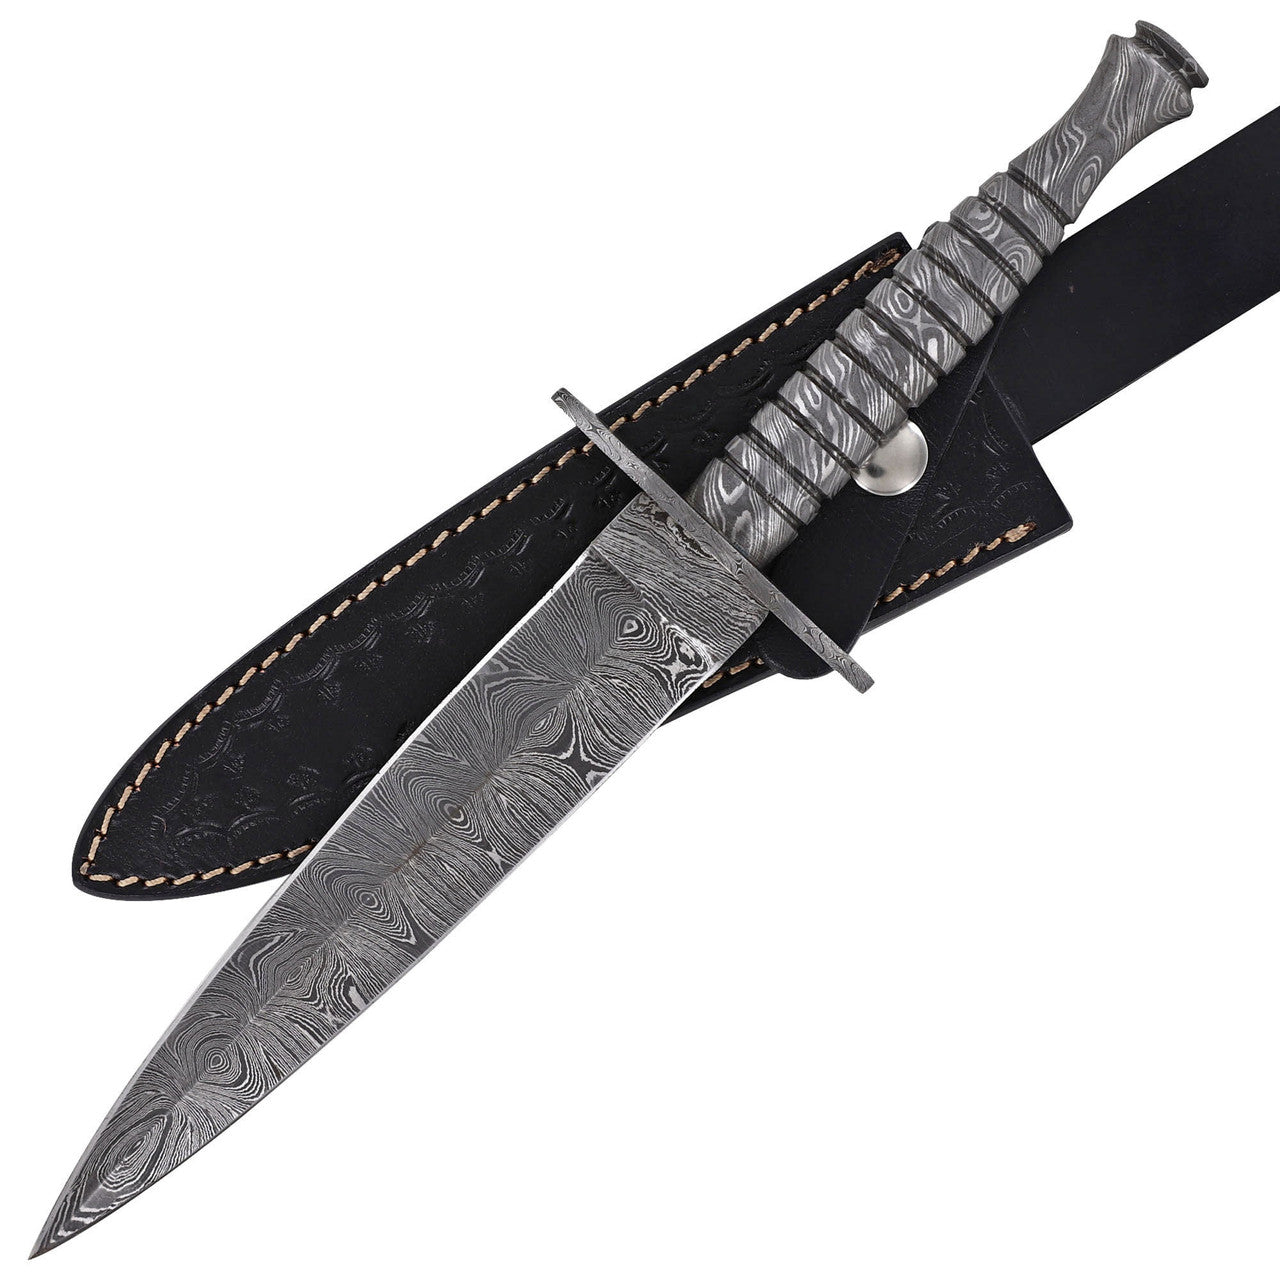 Full Damascus Steel Commando Knife with Leather Sheath-1